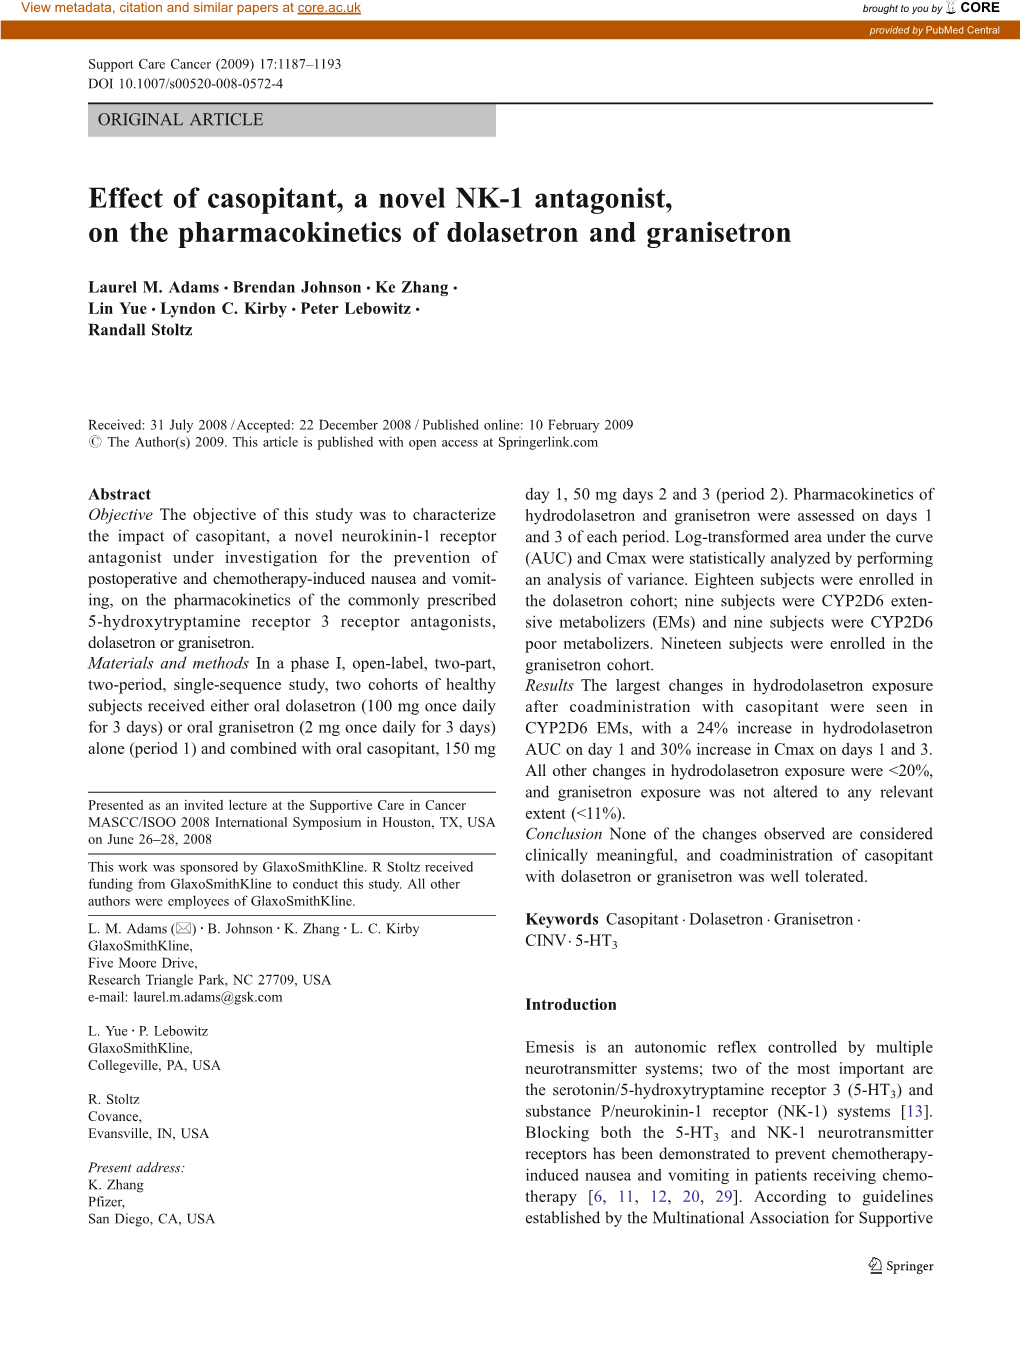 Effect of Casopitant, a Novel NK-1 Antagonist, on the Pharmacokinetics of Dolasetron and Granisetron